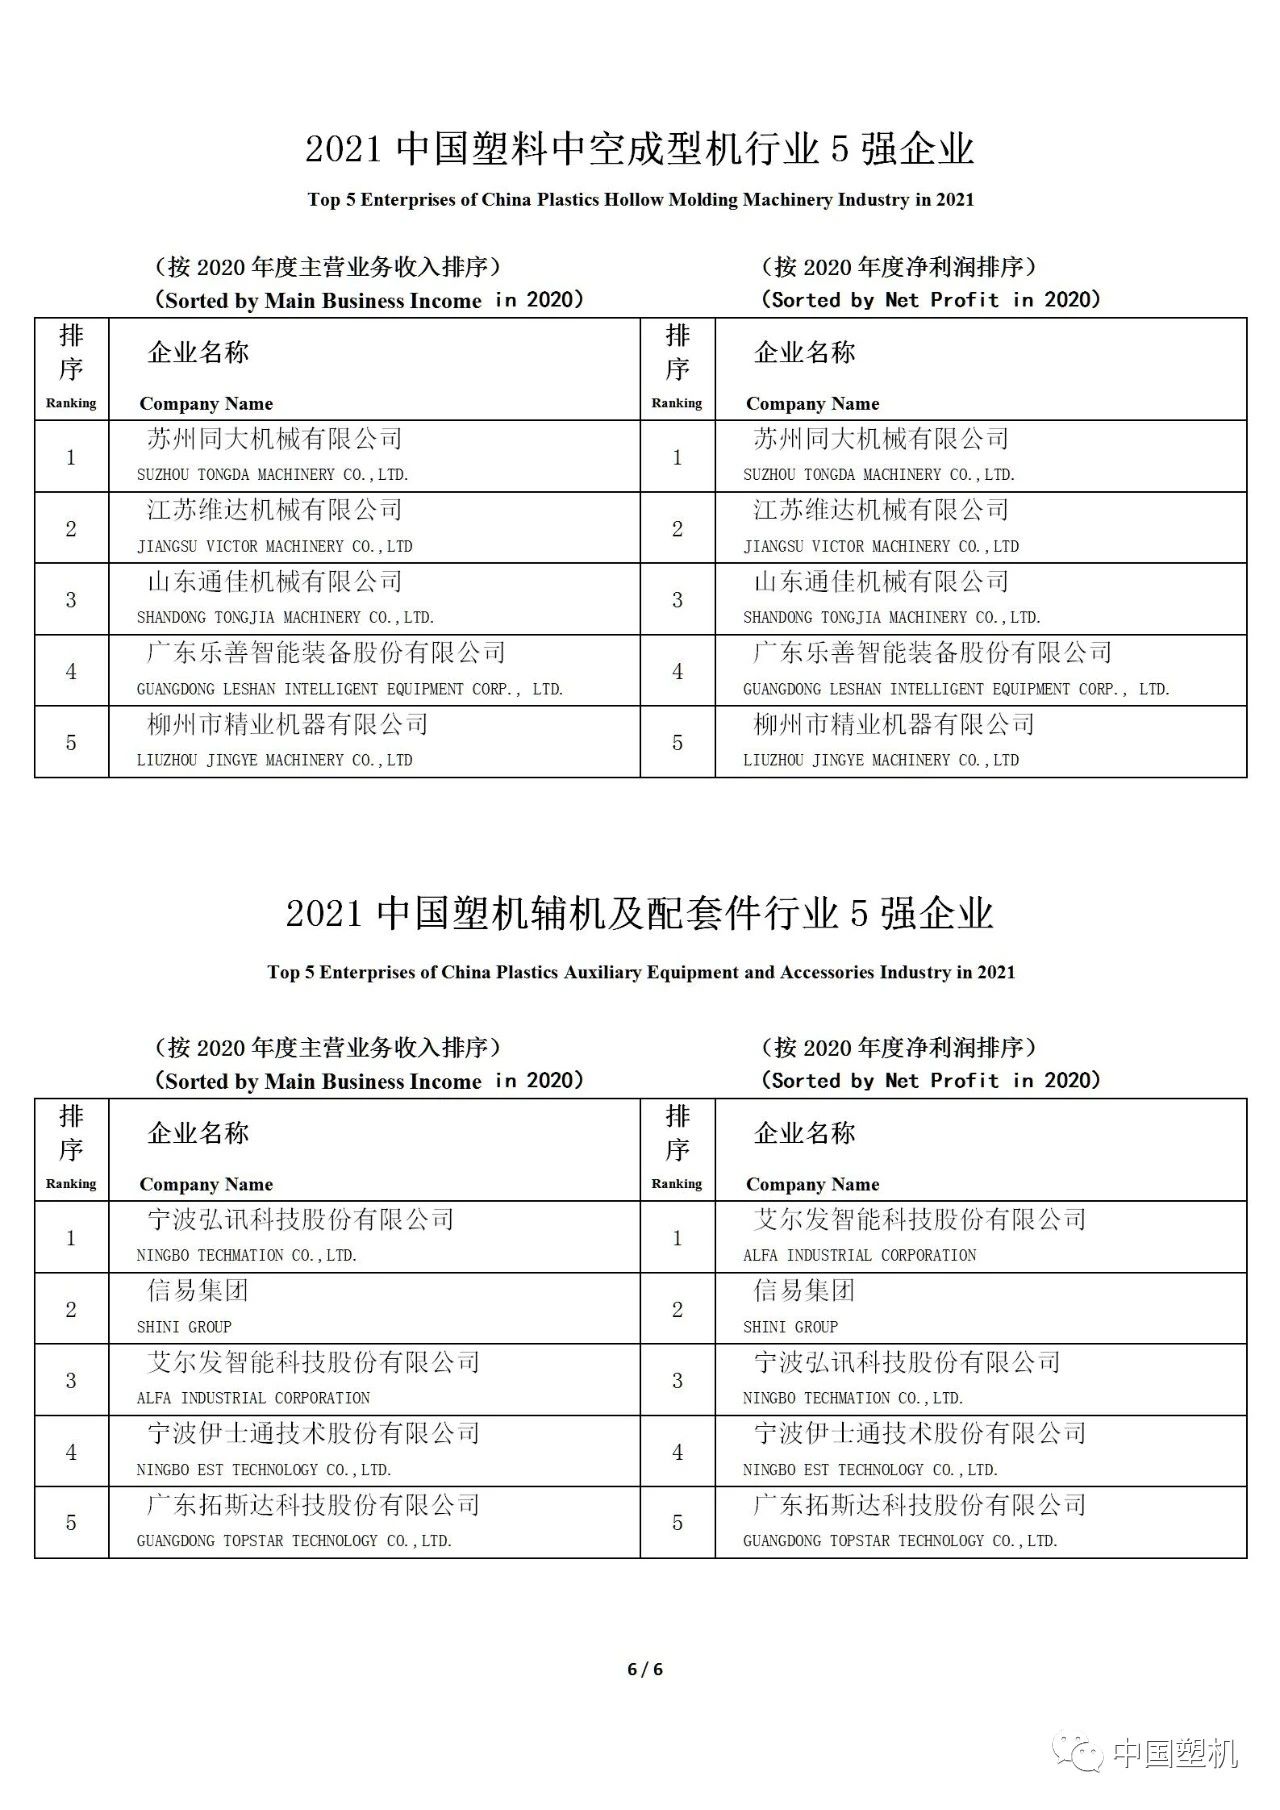 Picture 6 for 信易入選2021中國塑機輔機與配套件行業5強企業